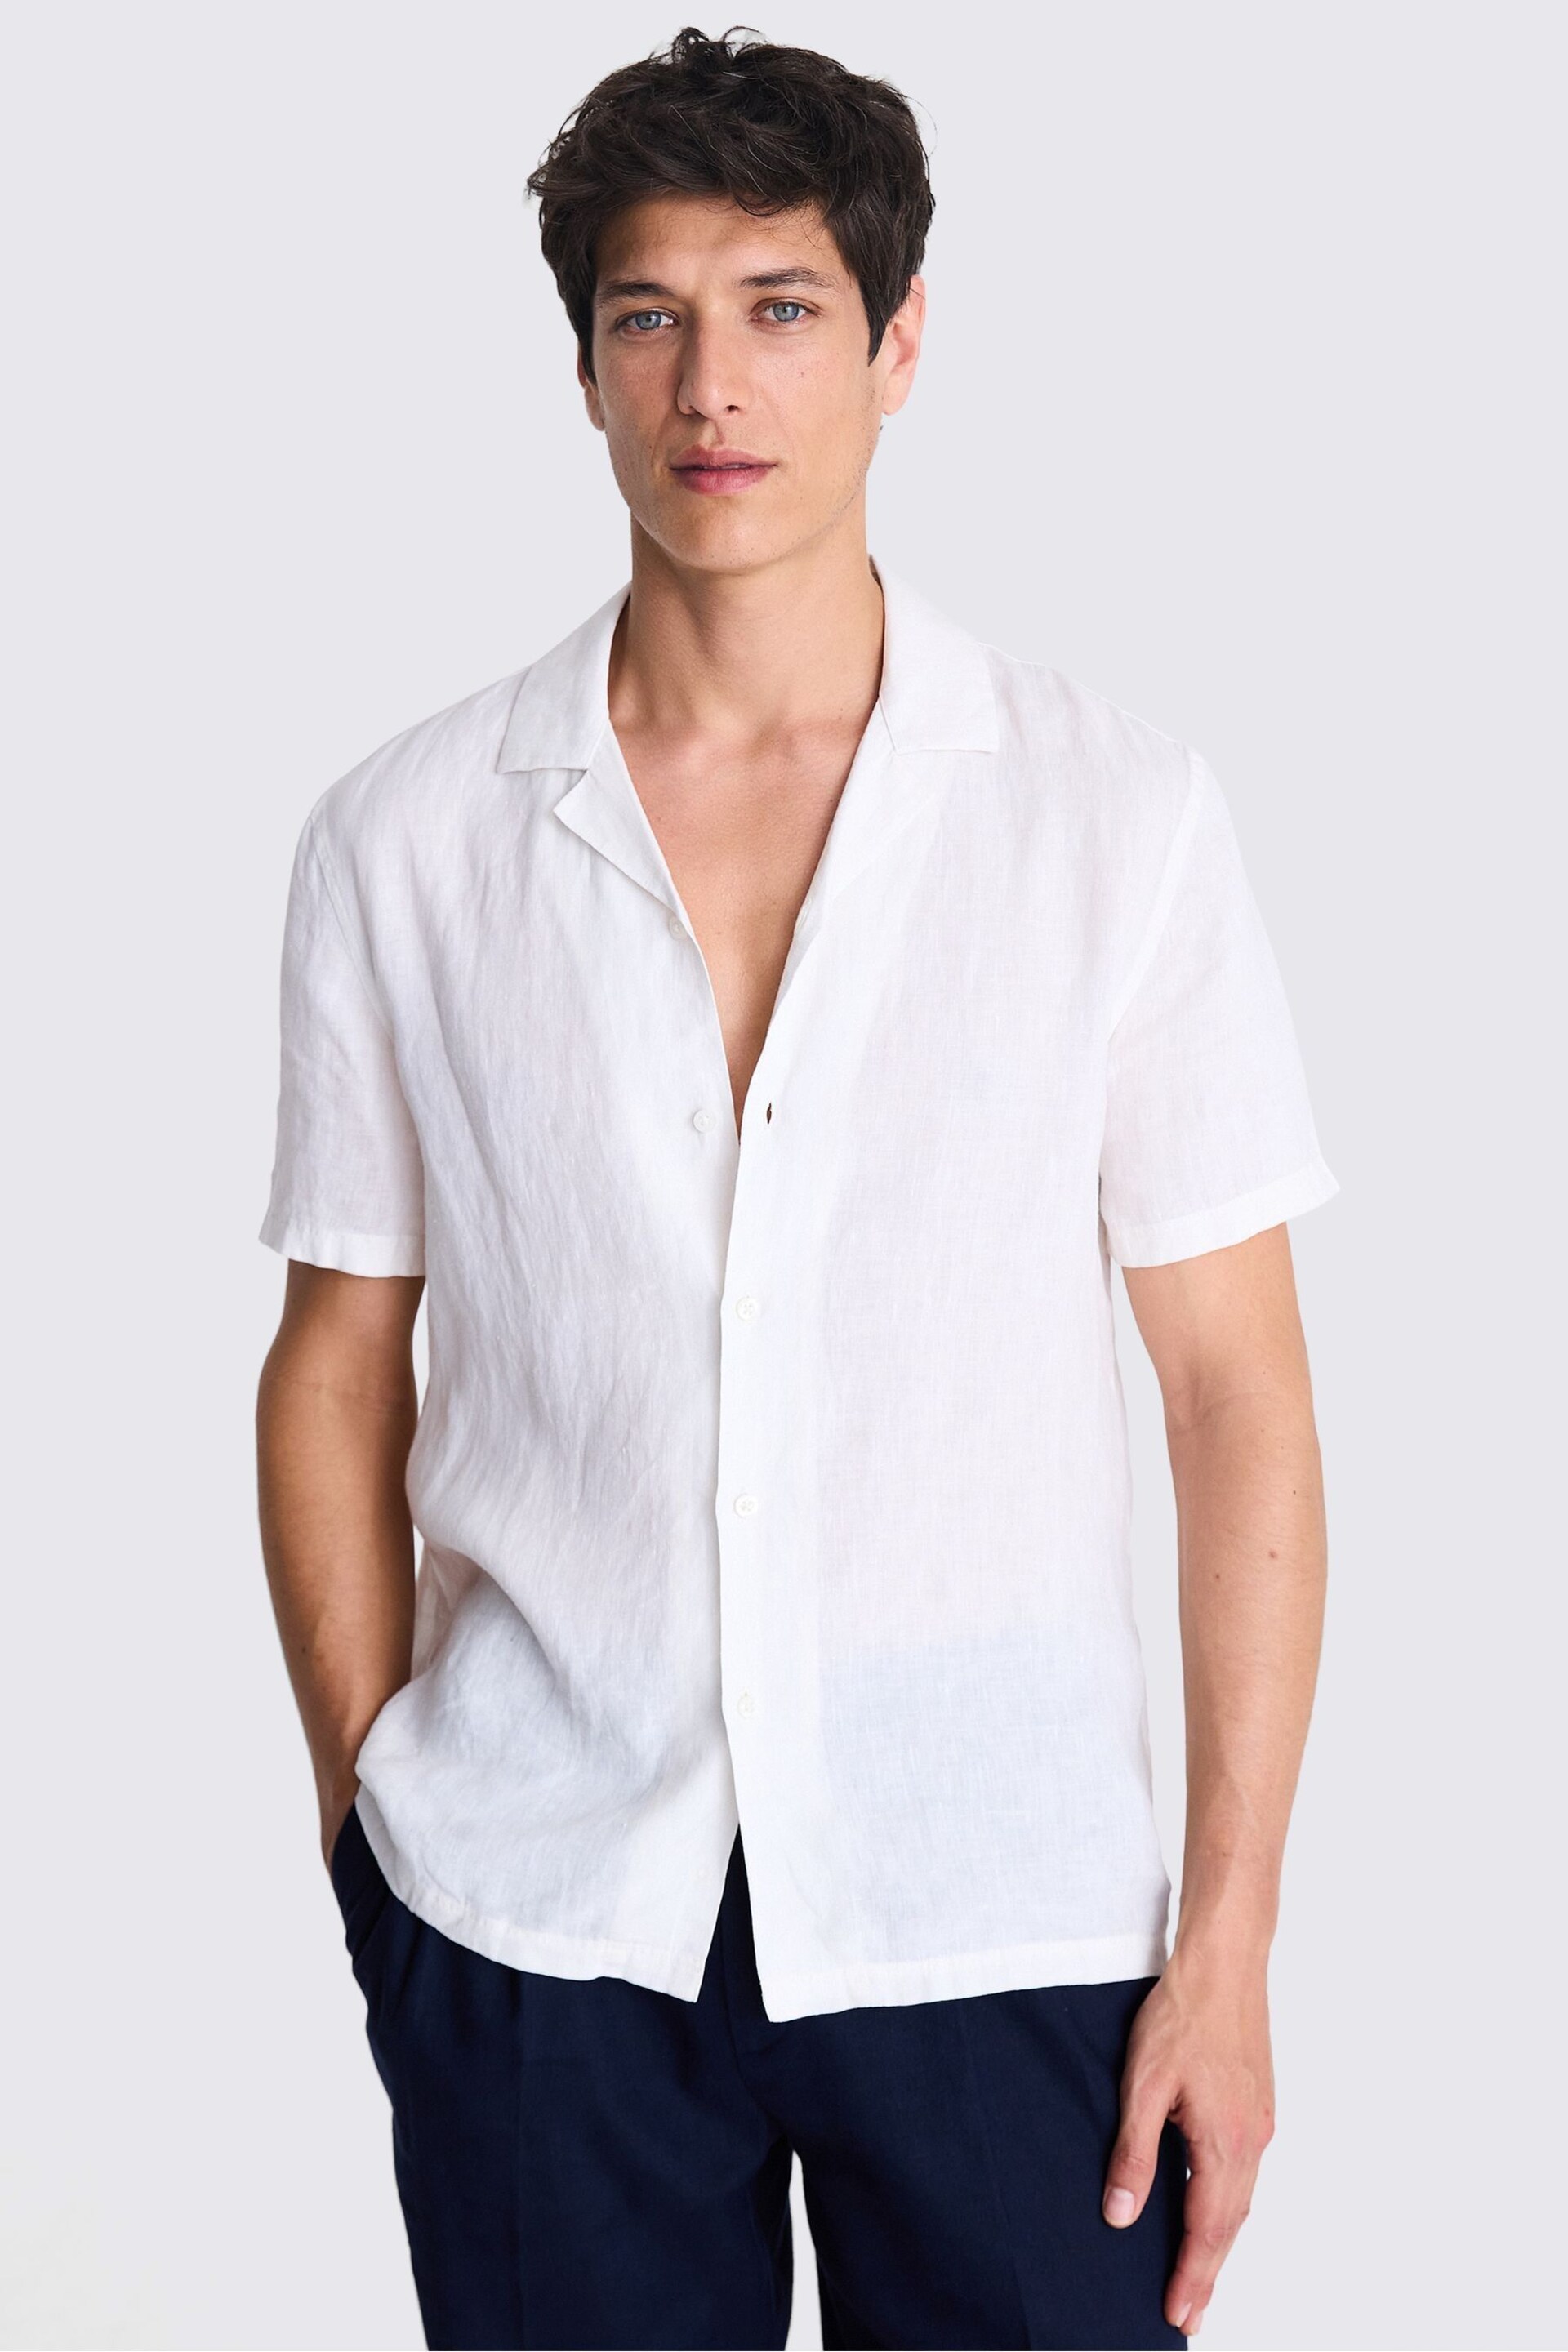 MOSS White Tailored Fit Linen Cuban Collar Shirt - Image 1 of 4